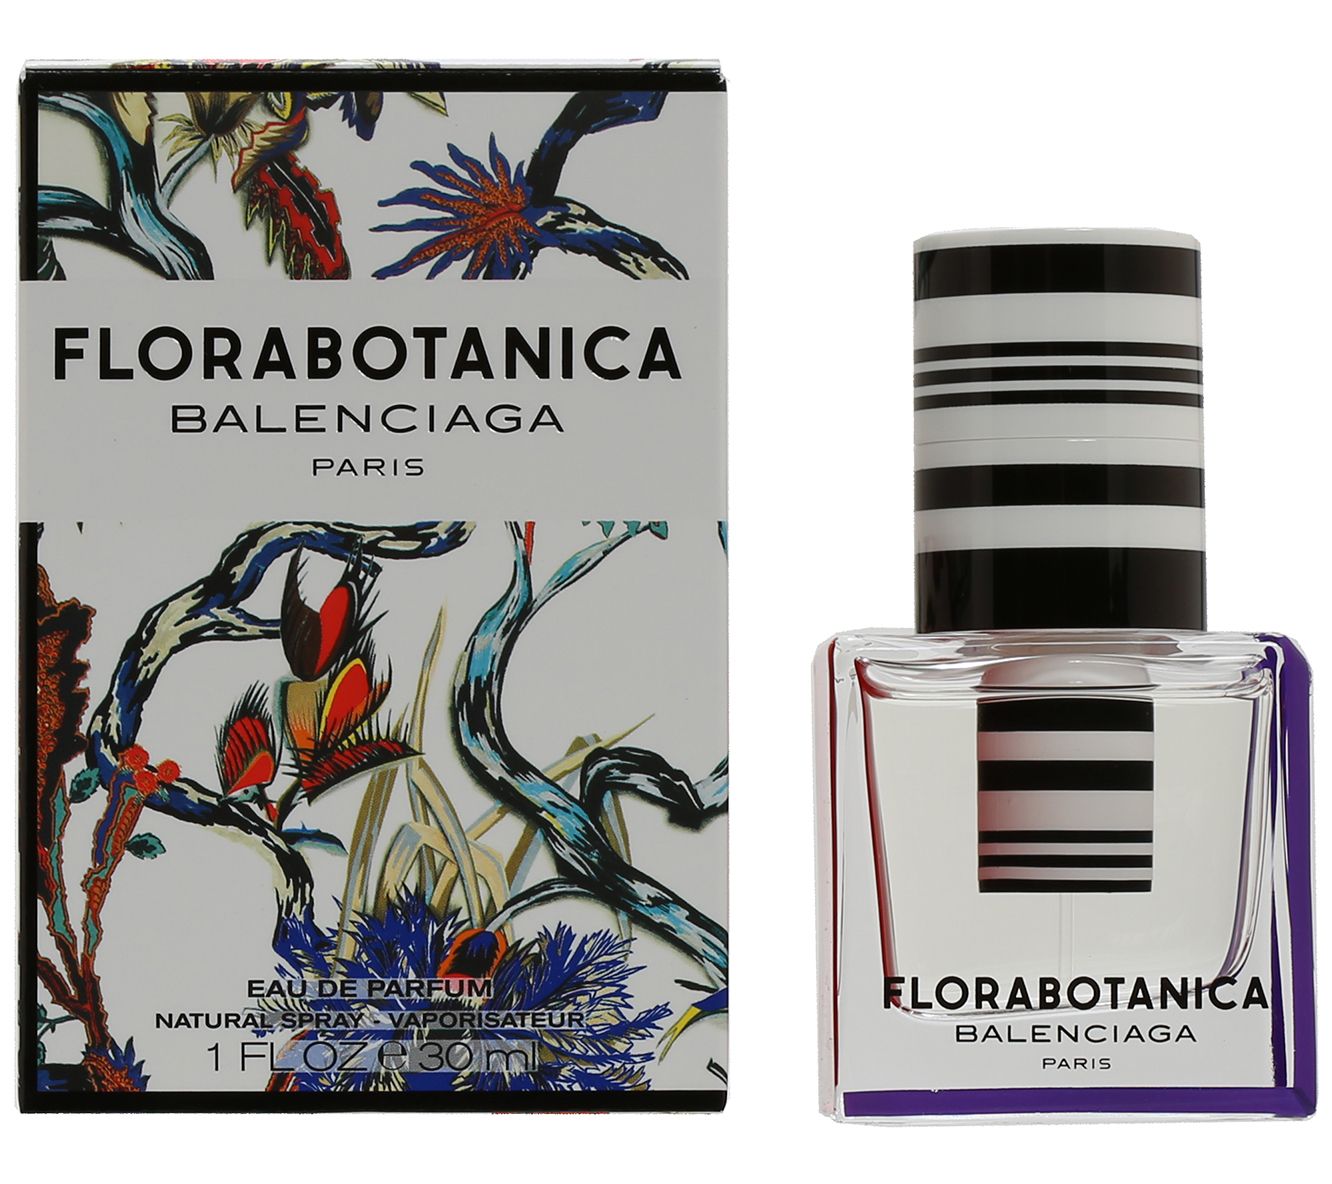 Balenciaga FloraBotanica Ladies Eau Parfum Spray - QVC.com